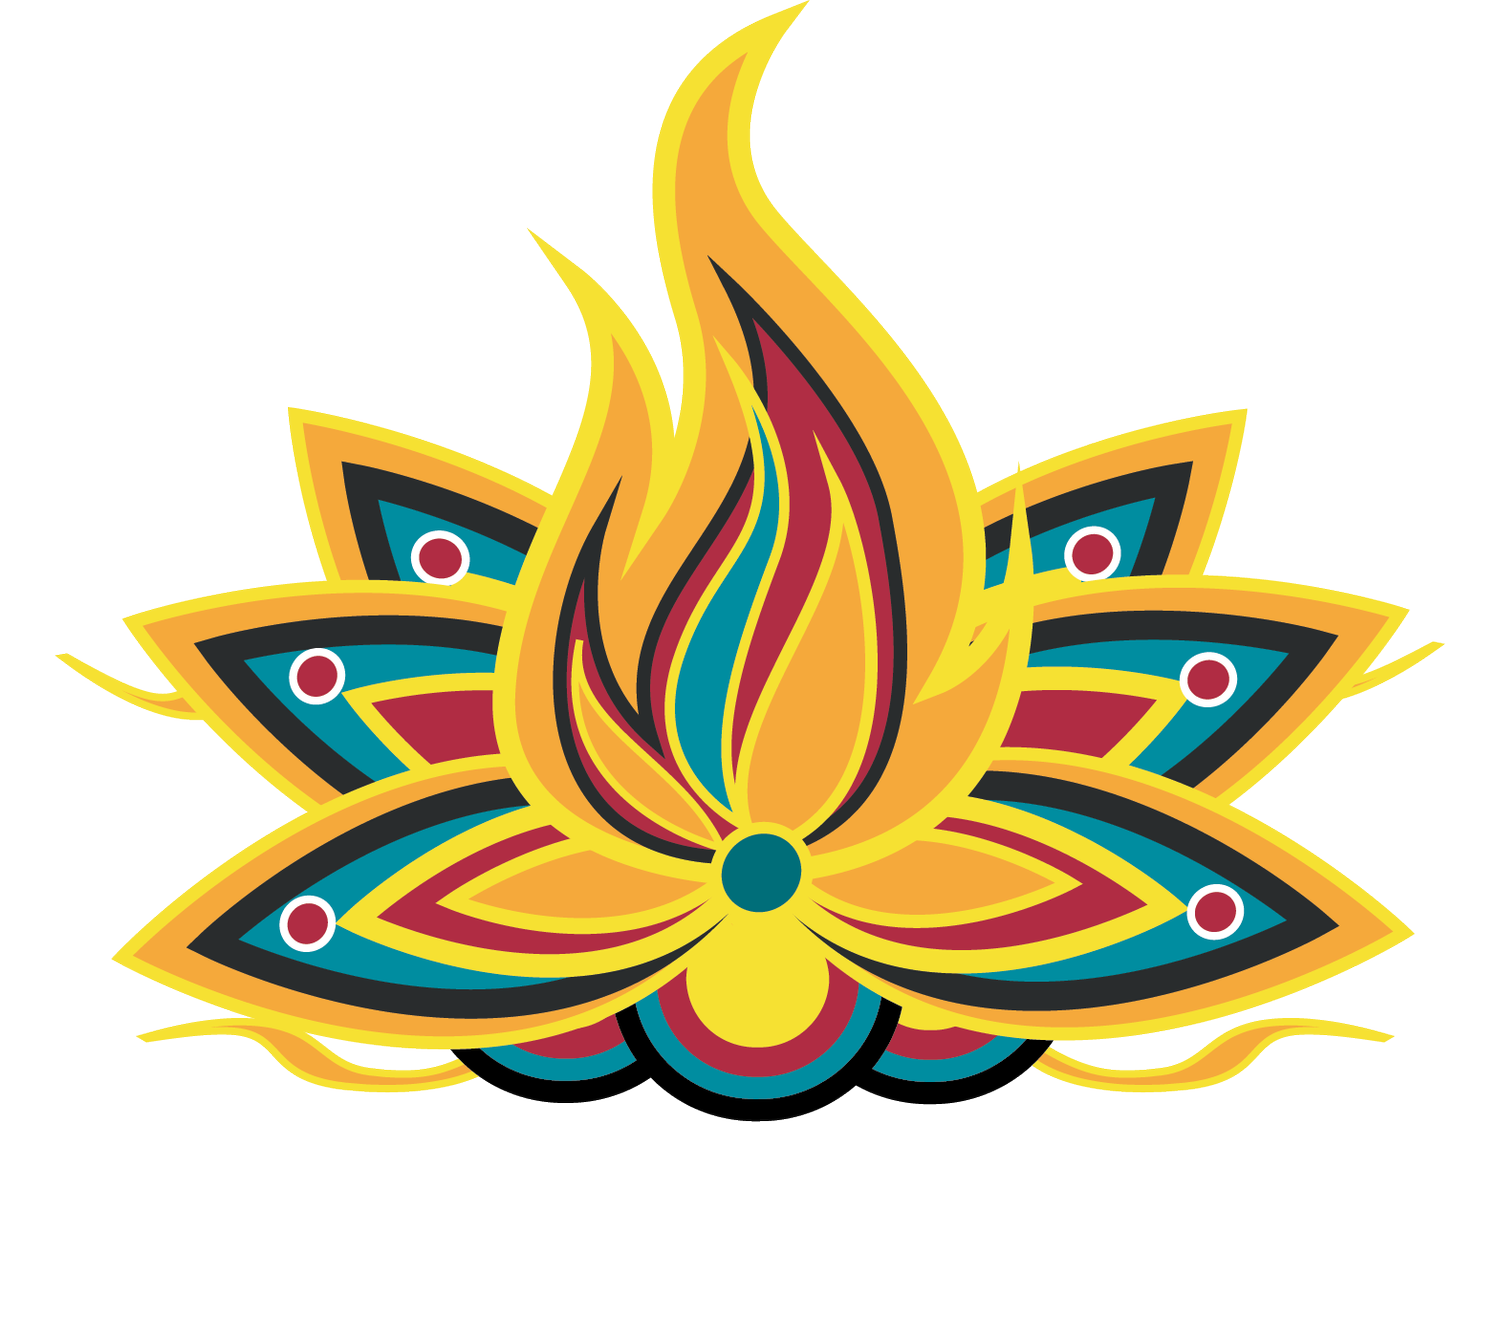 8th Fire Solar